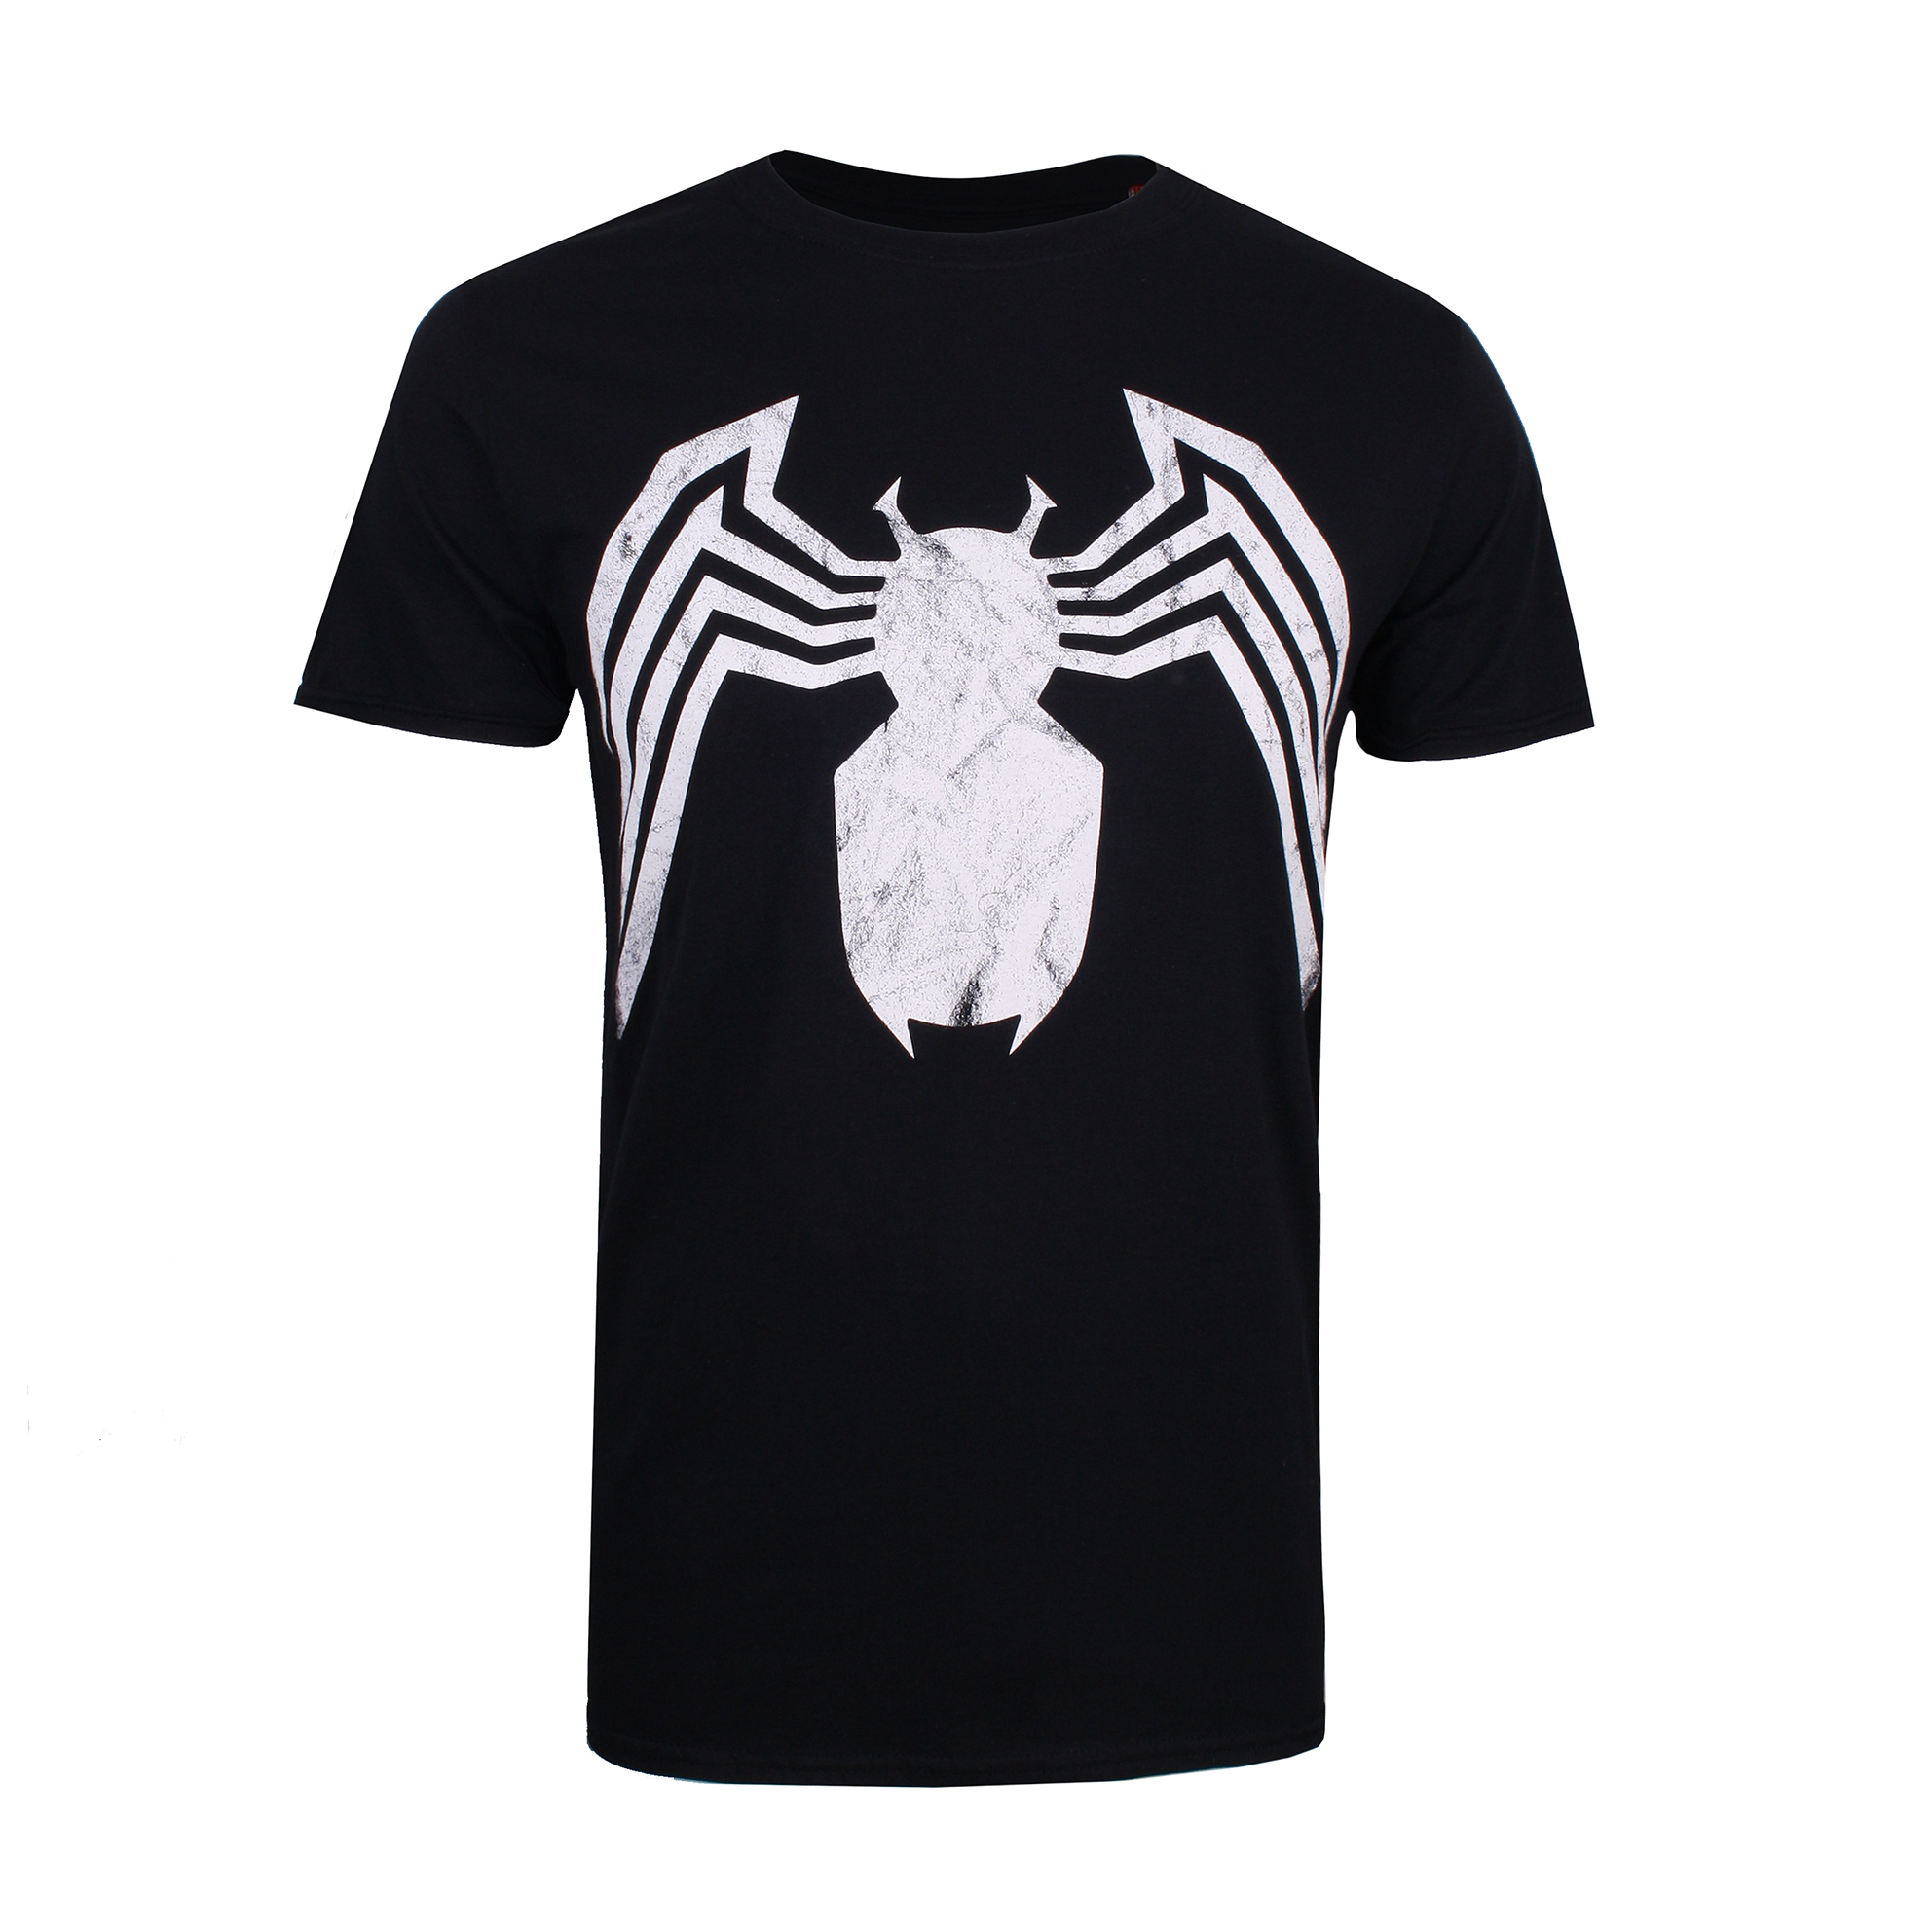 Marvel Venom Emblem Black T-Shirt | The Rainy Days